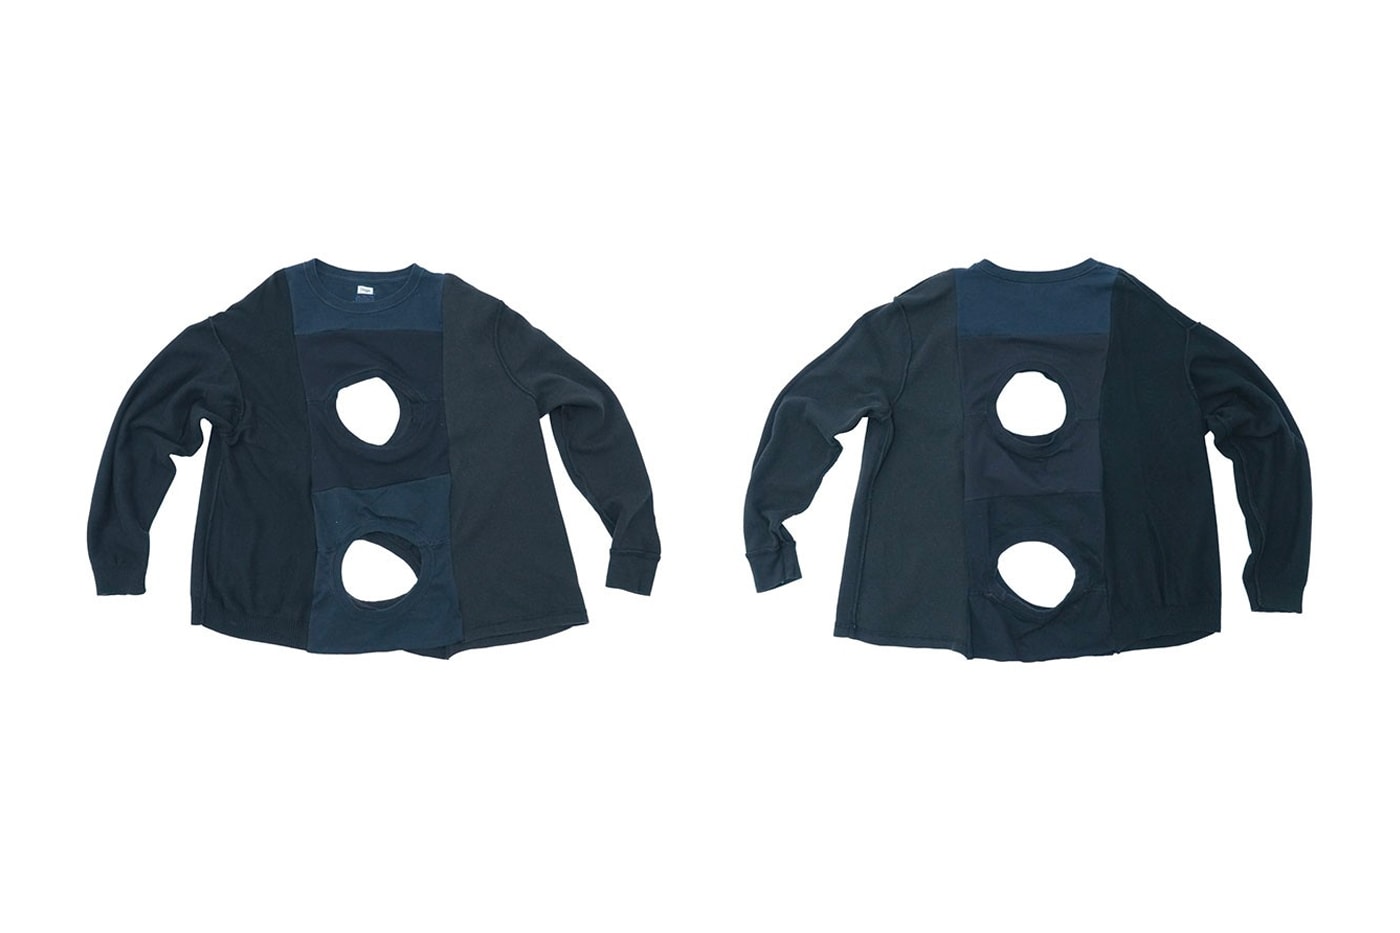 KOHH's Dogs Remake Drops Reworked Jackets & Shirts  dogsoji tokyo vintage grunge patchwork t-shirts button-downs varsity jackets lapel blazers release info drop 